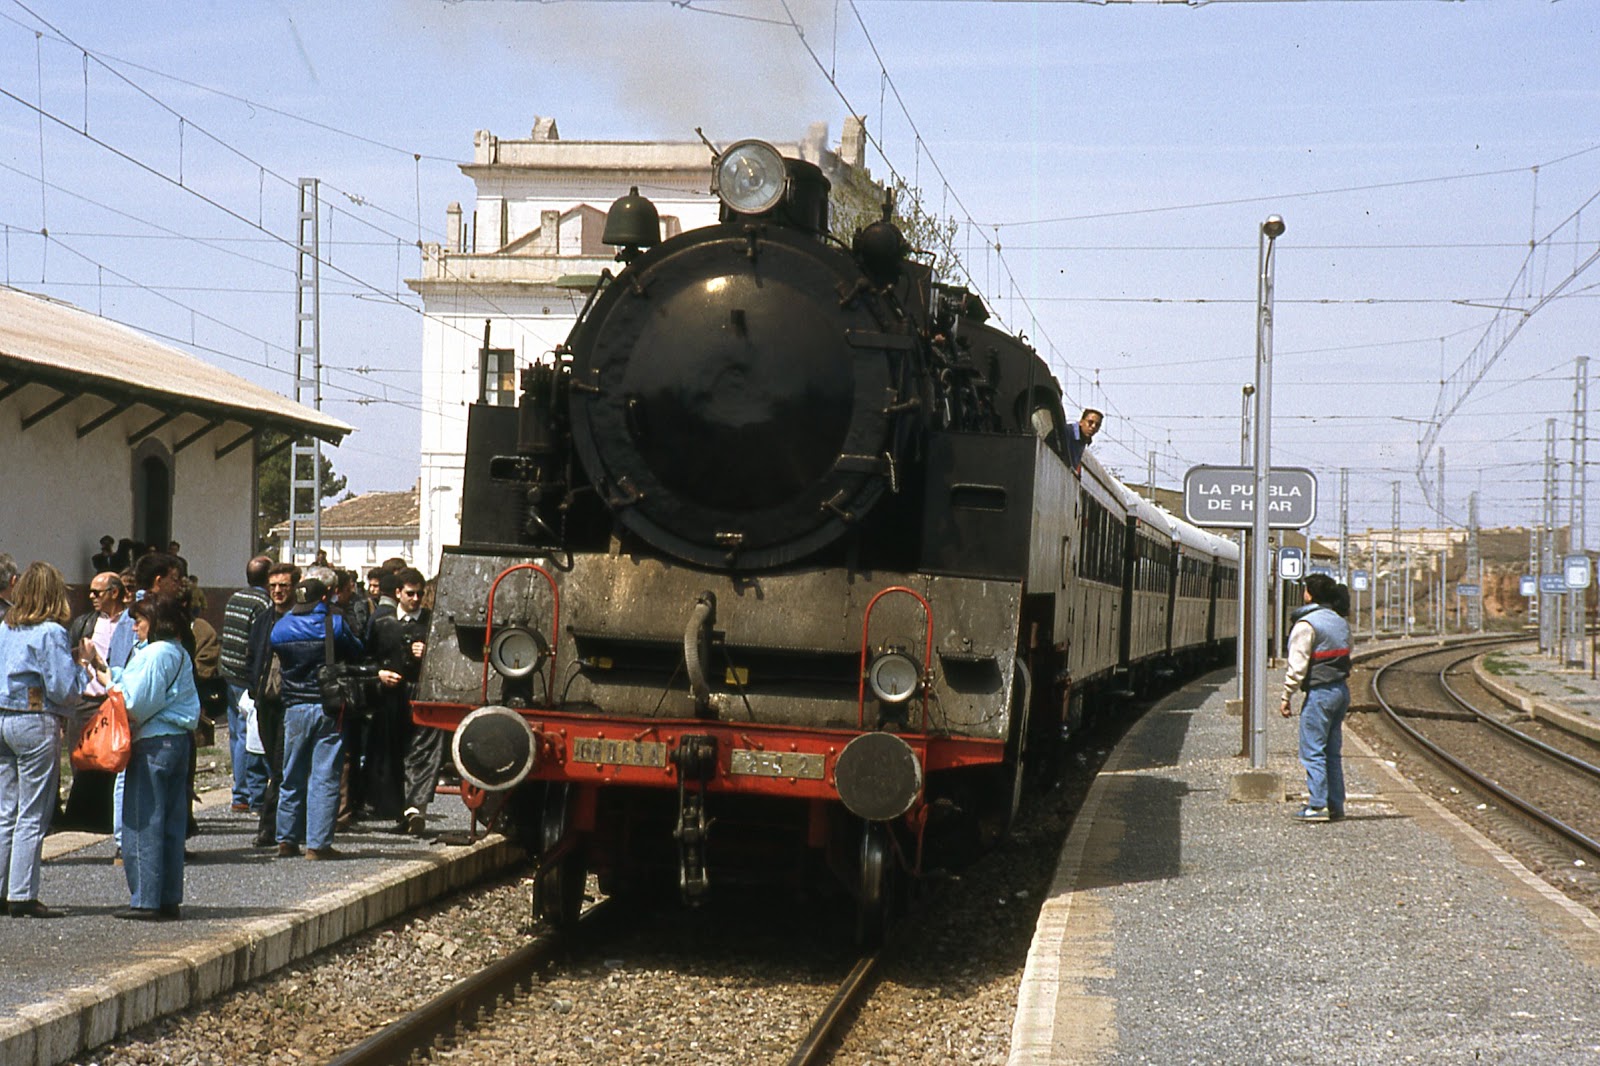 +++Puebla de Hijar 1992, tren del tambor-Olaizola